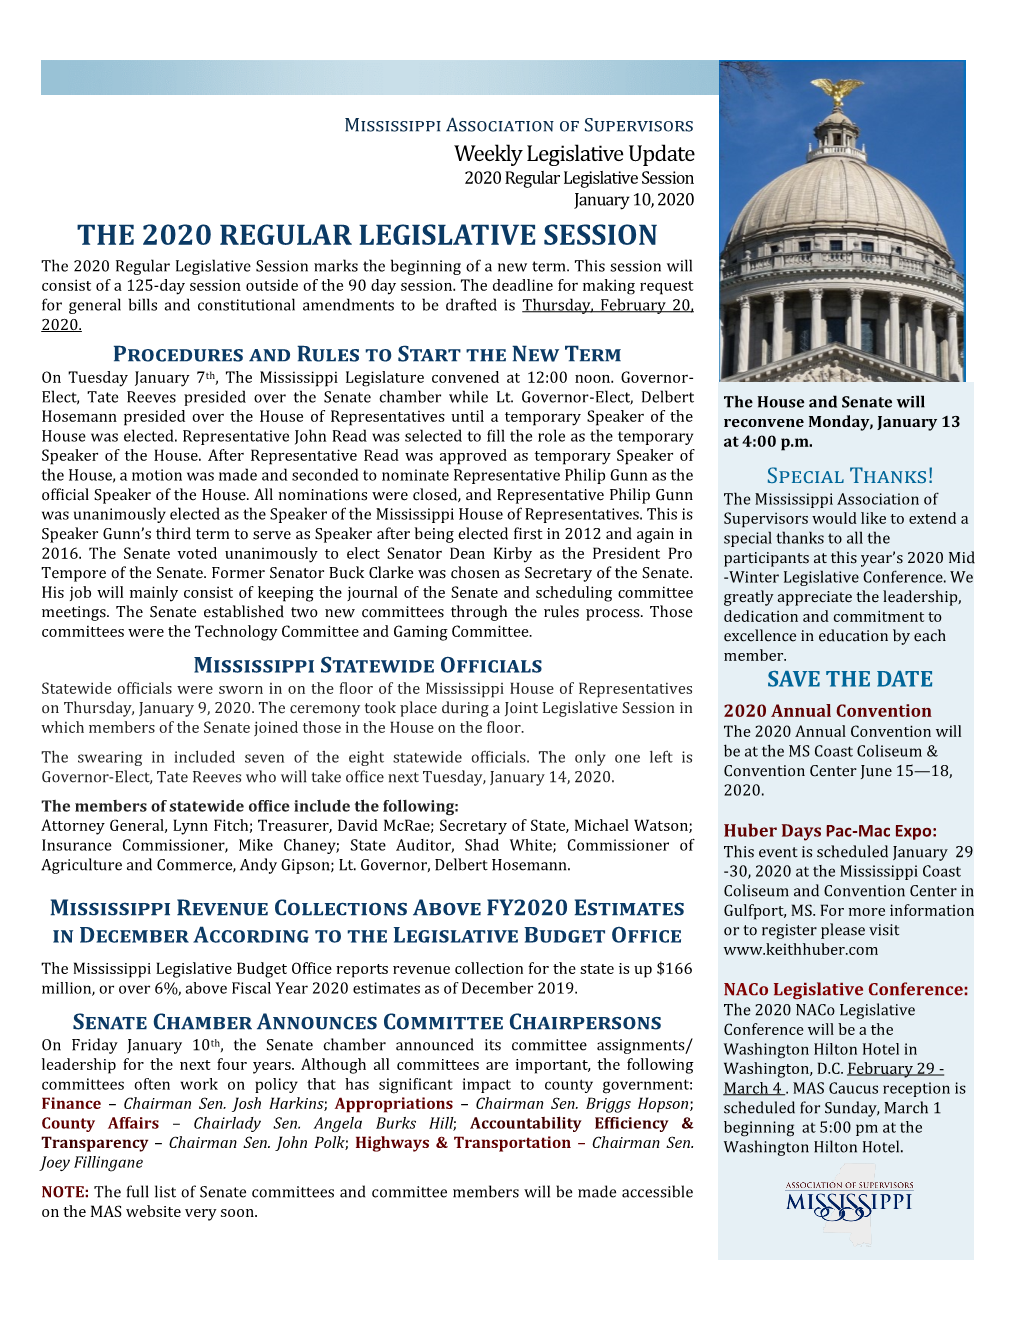 The 2020 Regular Legislative Session